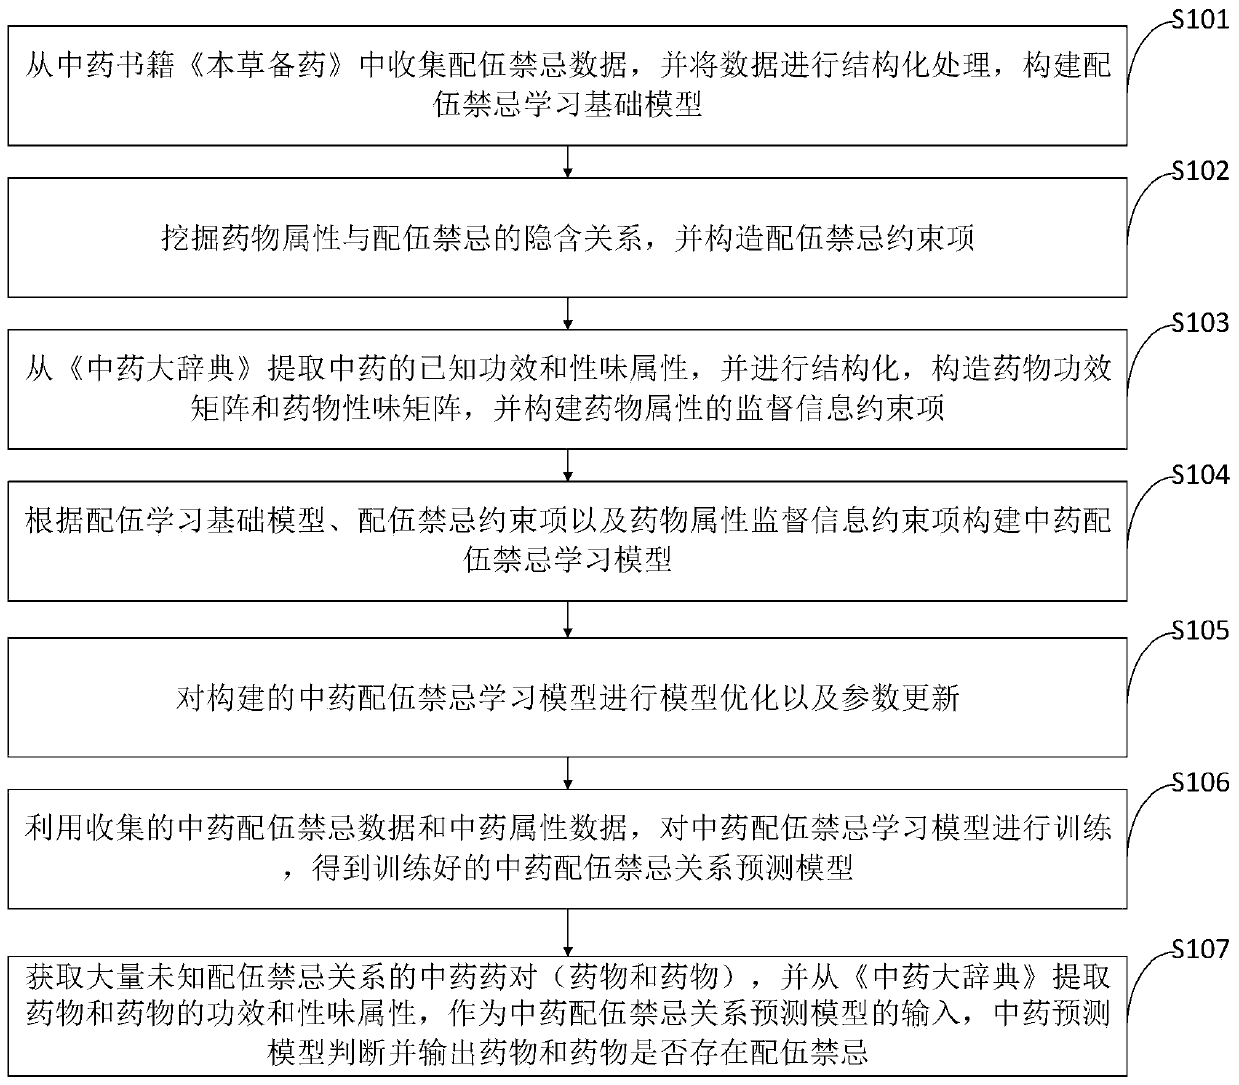 Chinese medicine incompatibility prediction method based on supervision learning framework